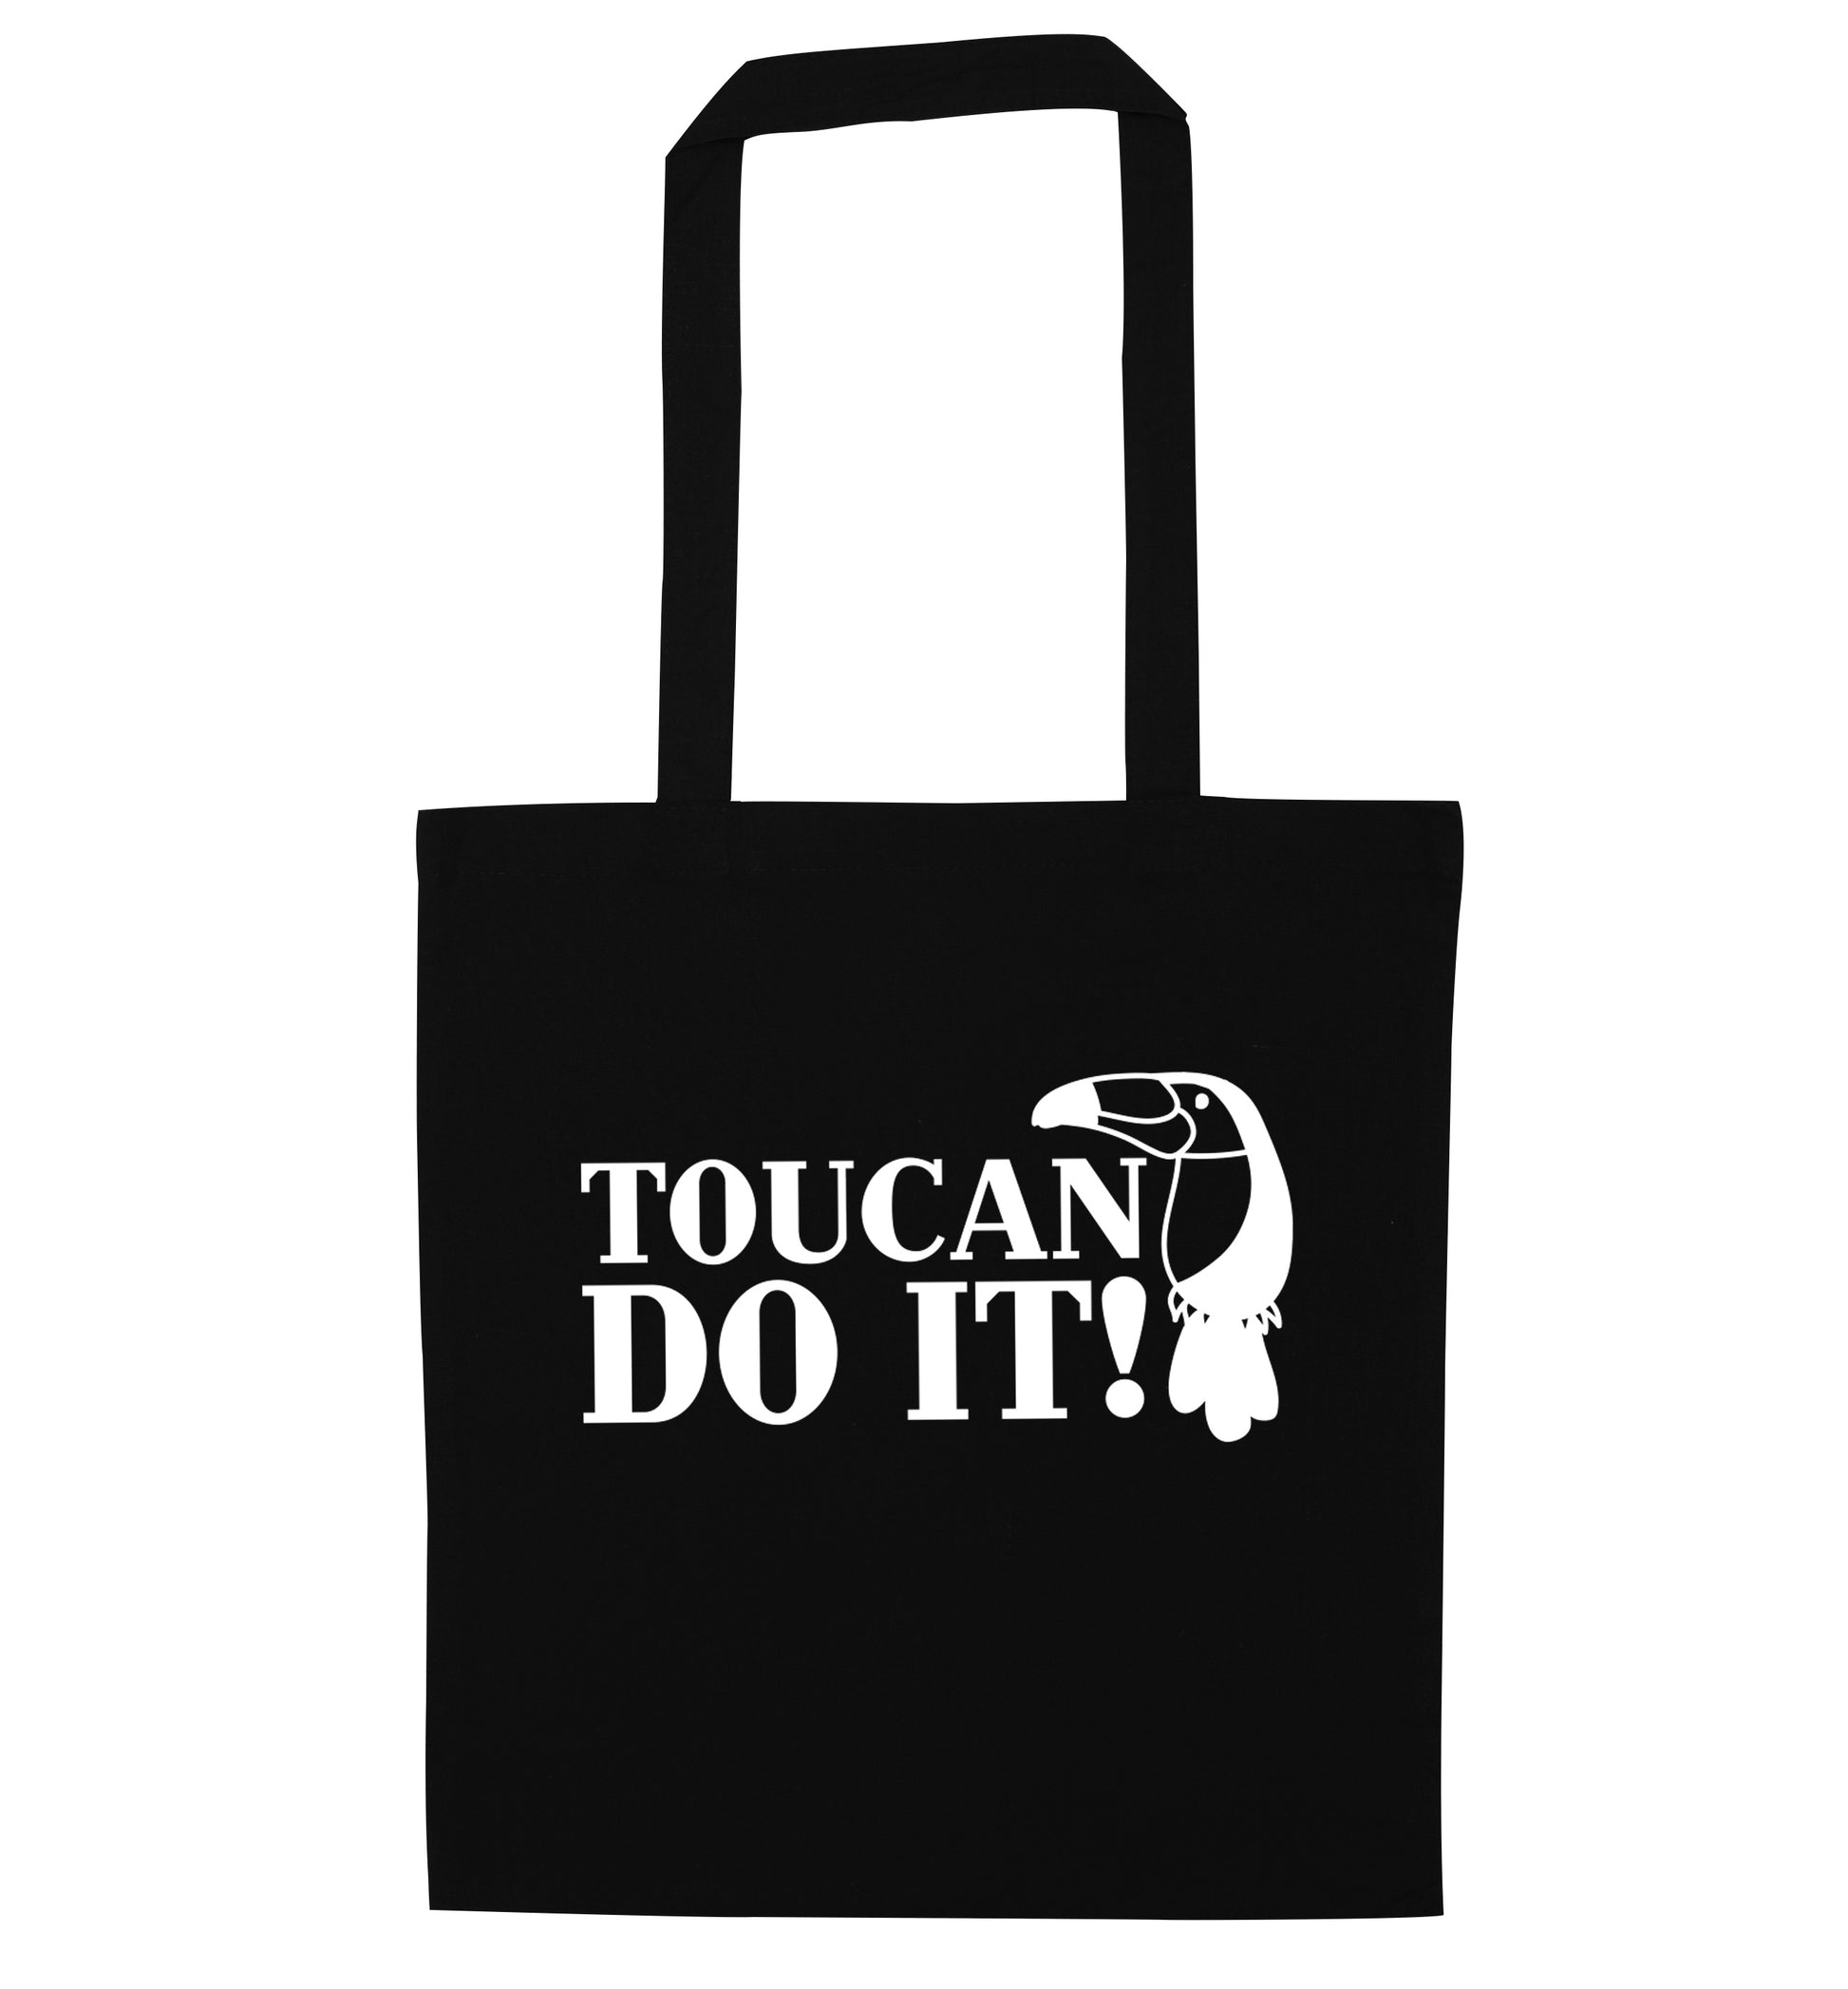 Toucan do it! black tote bag